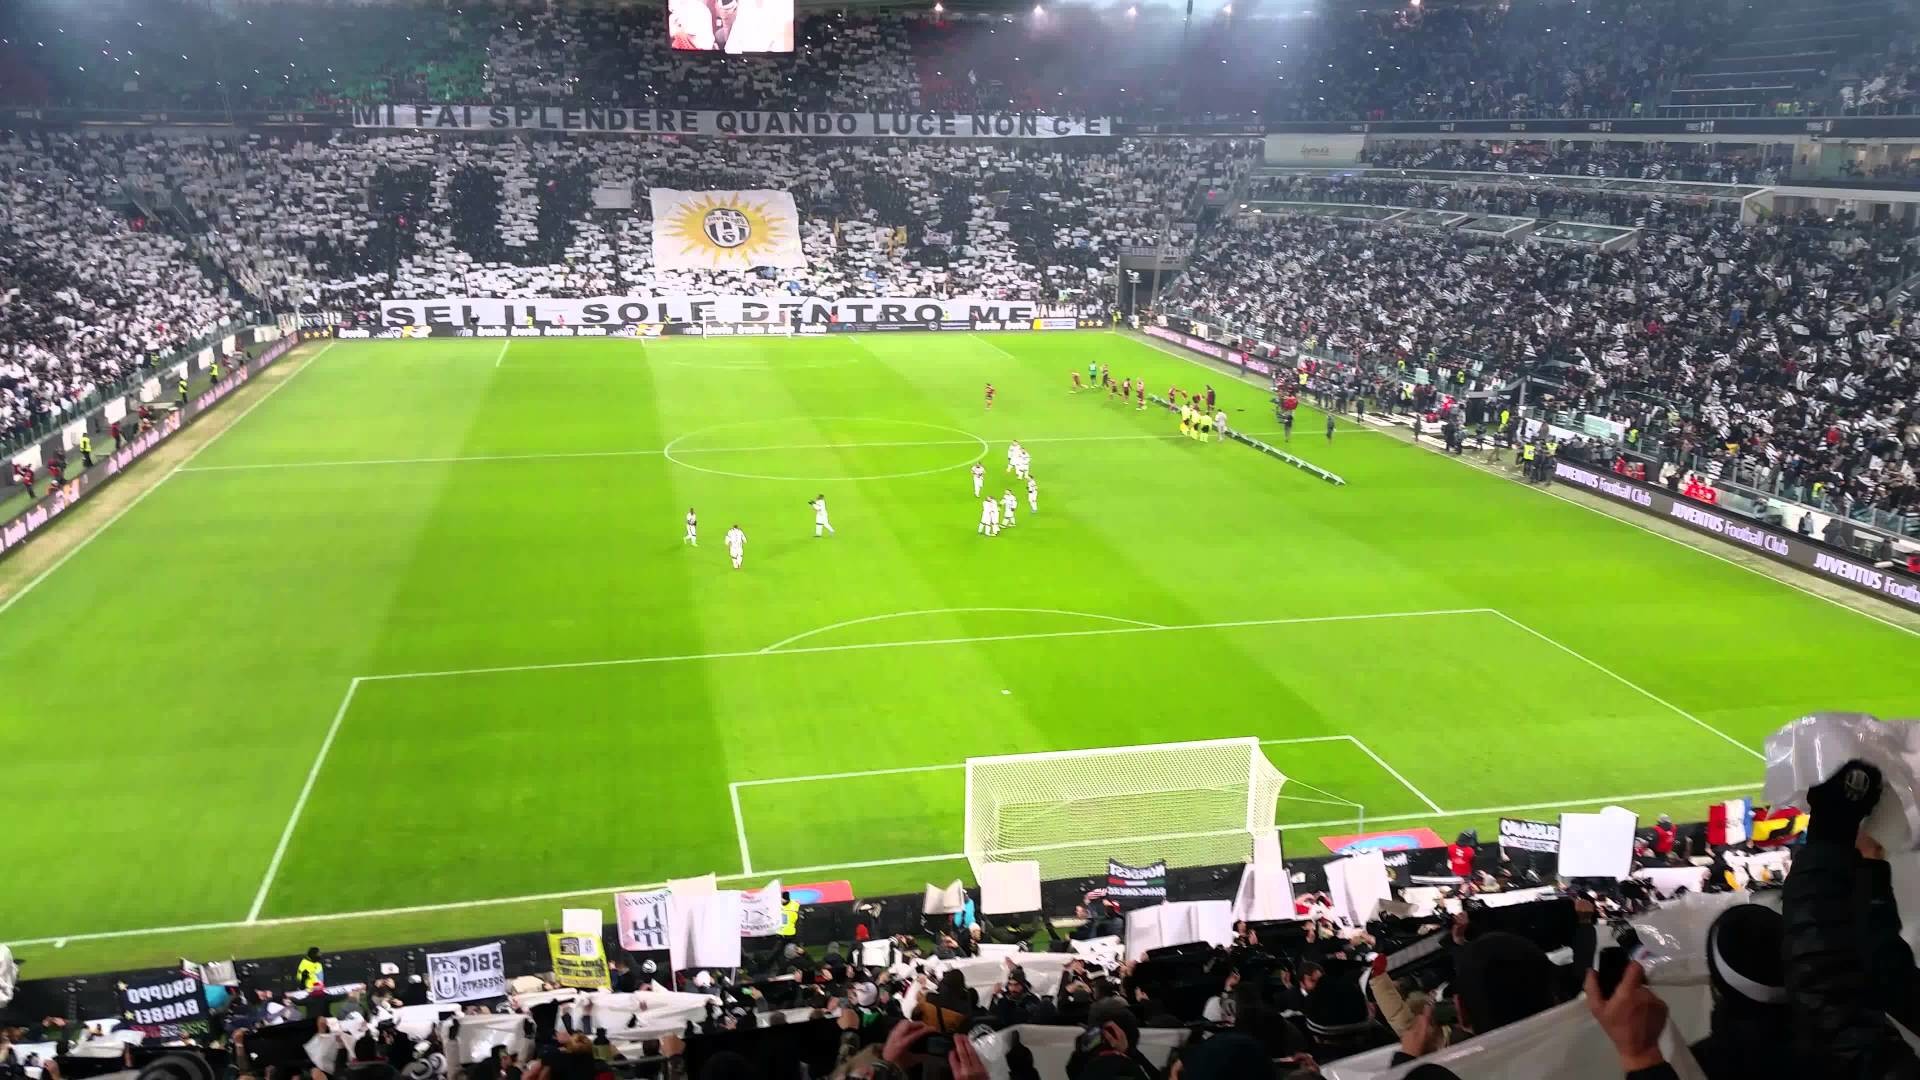 Стадион Ювентуса. Альянц Арена Ювентус. Juventus стадион обои. Стадион Ювентуса с высоты.